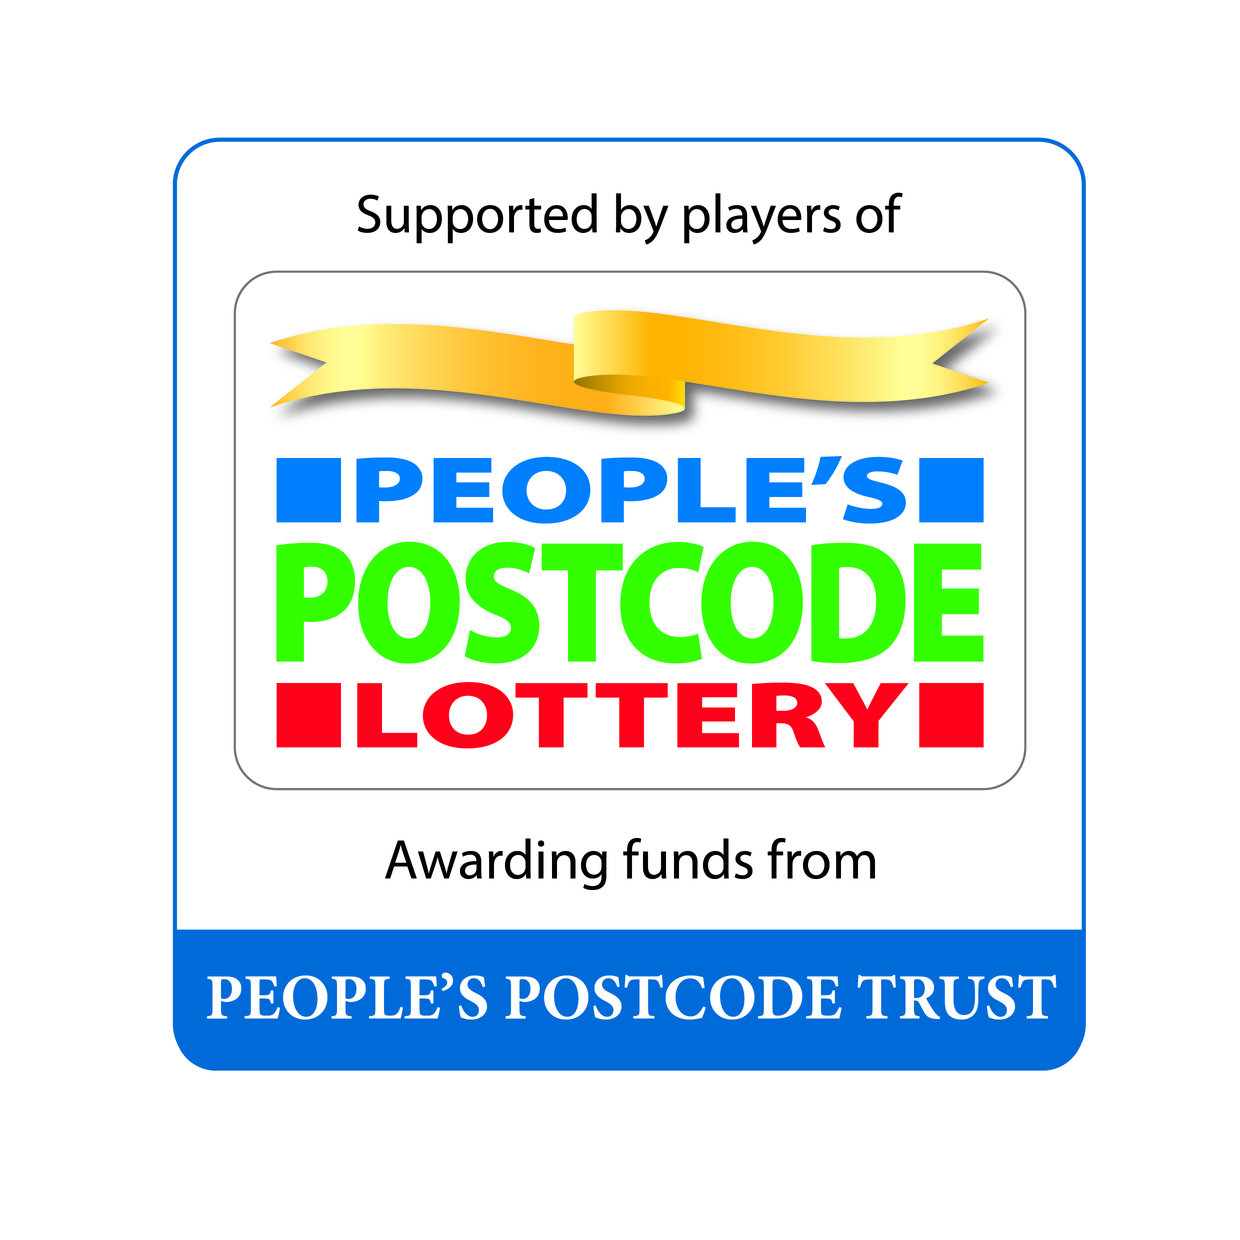 People postcode lottery logo